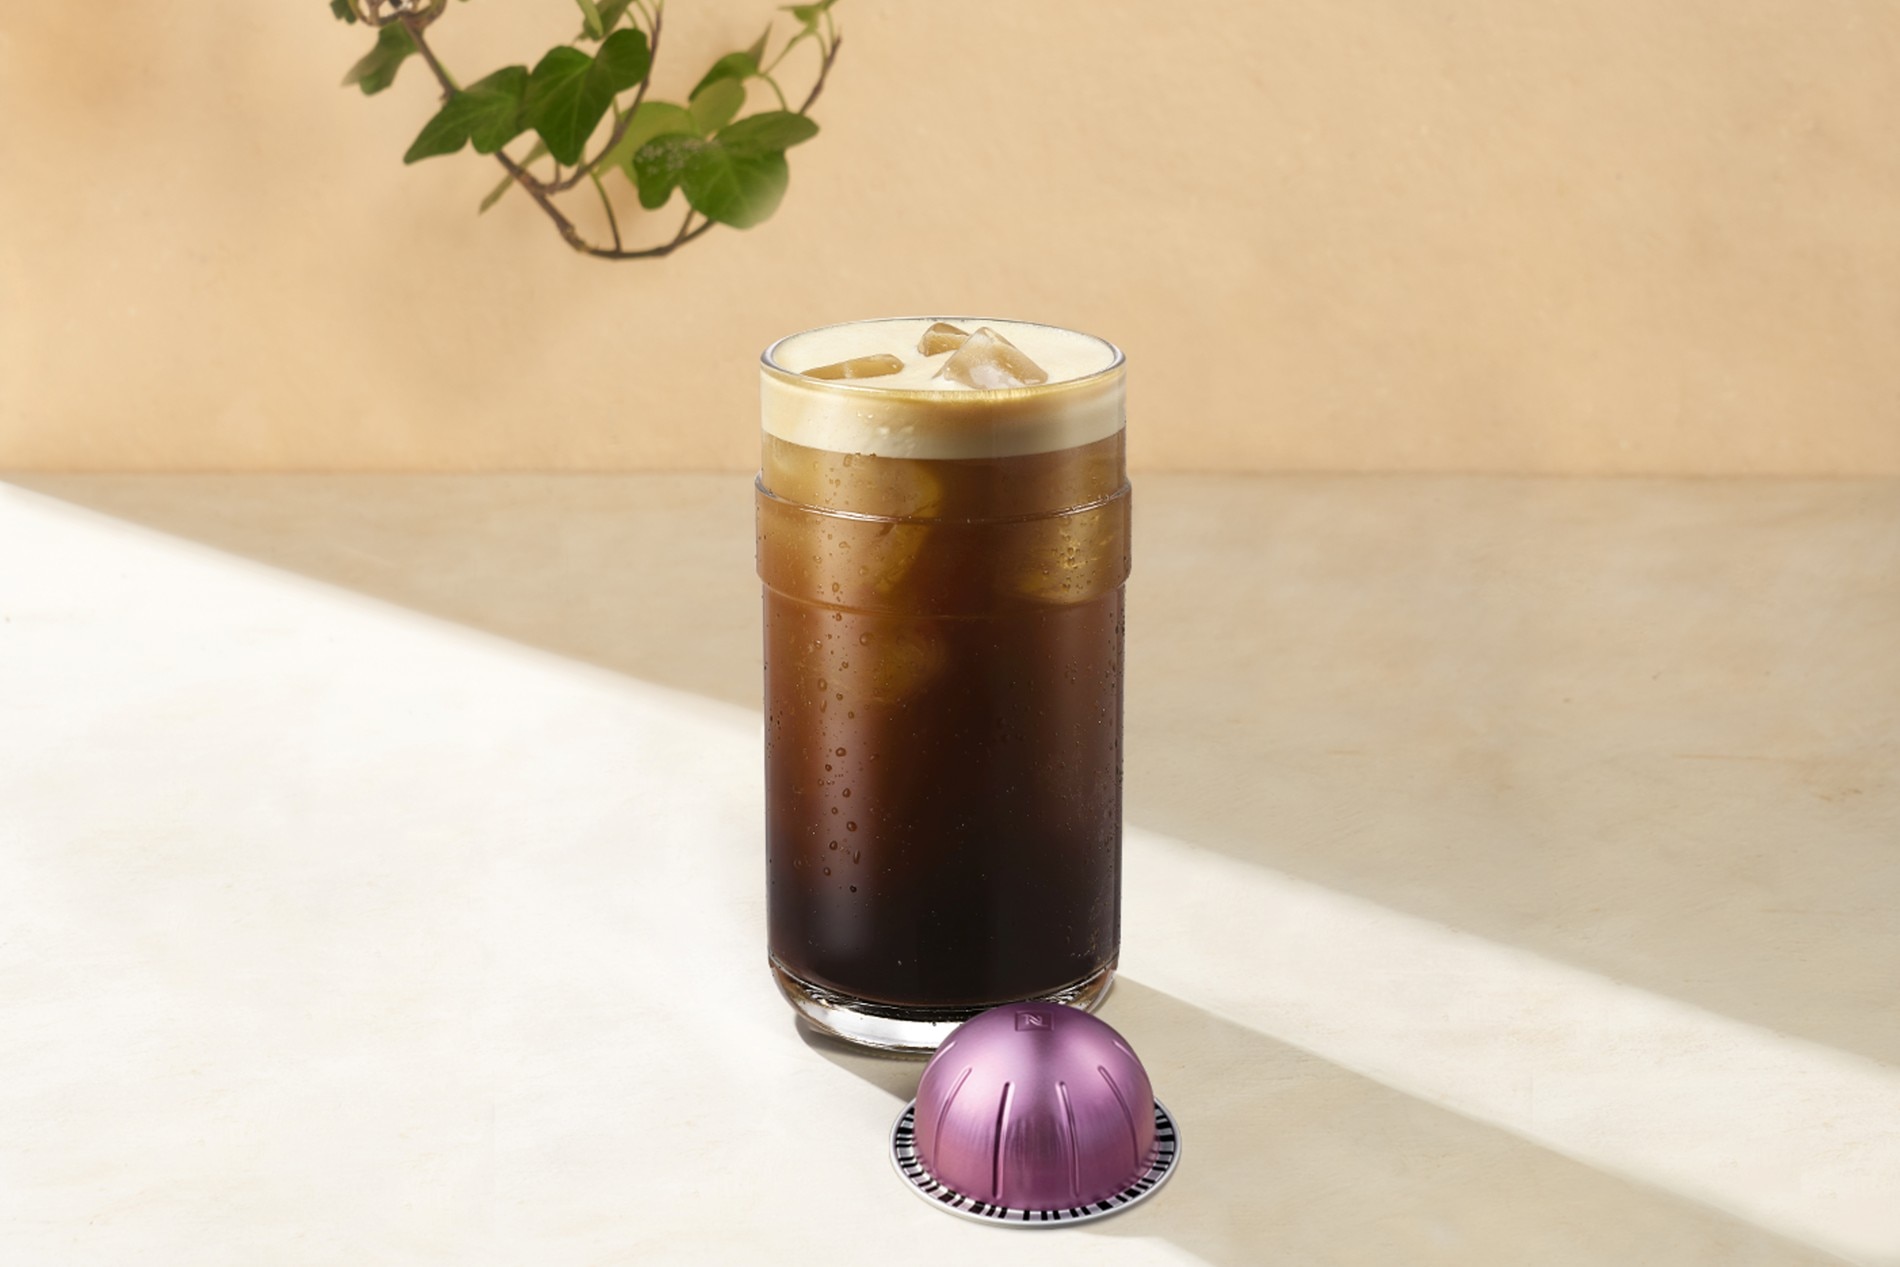 How to Make Iced Coffee with Nespresso - CoffeeHolli.com